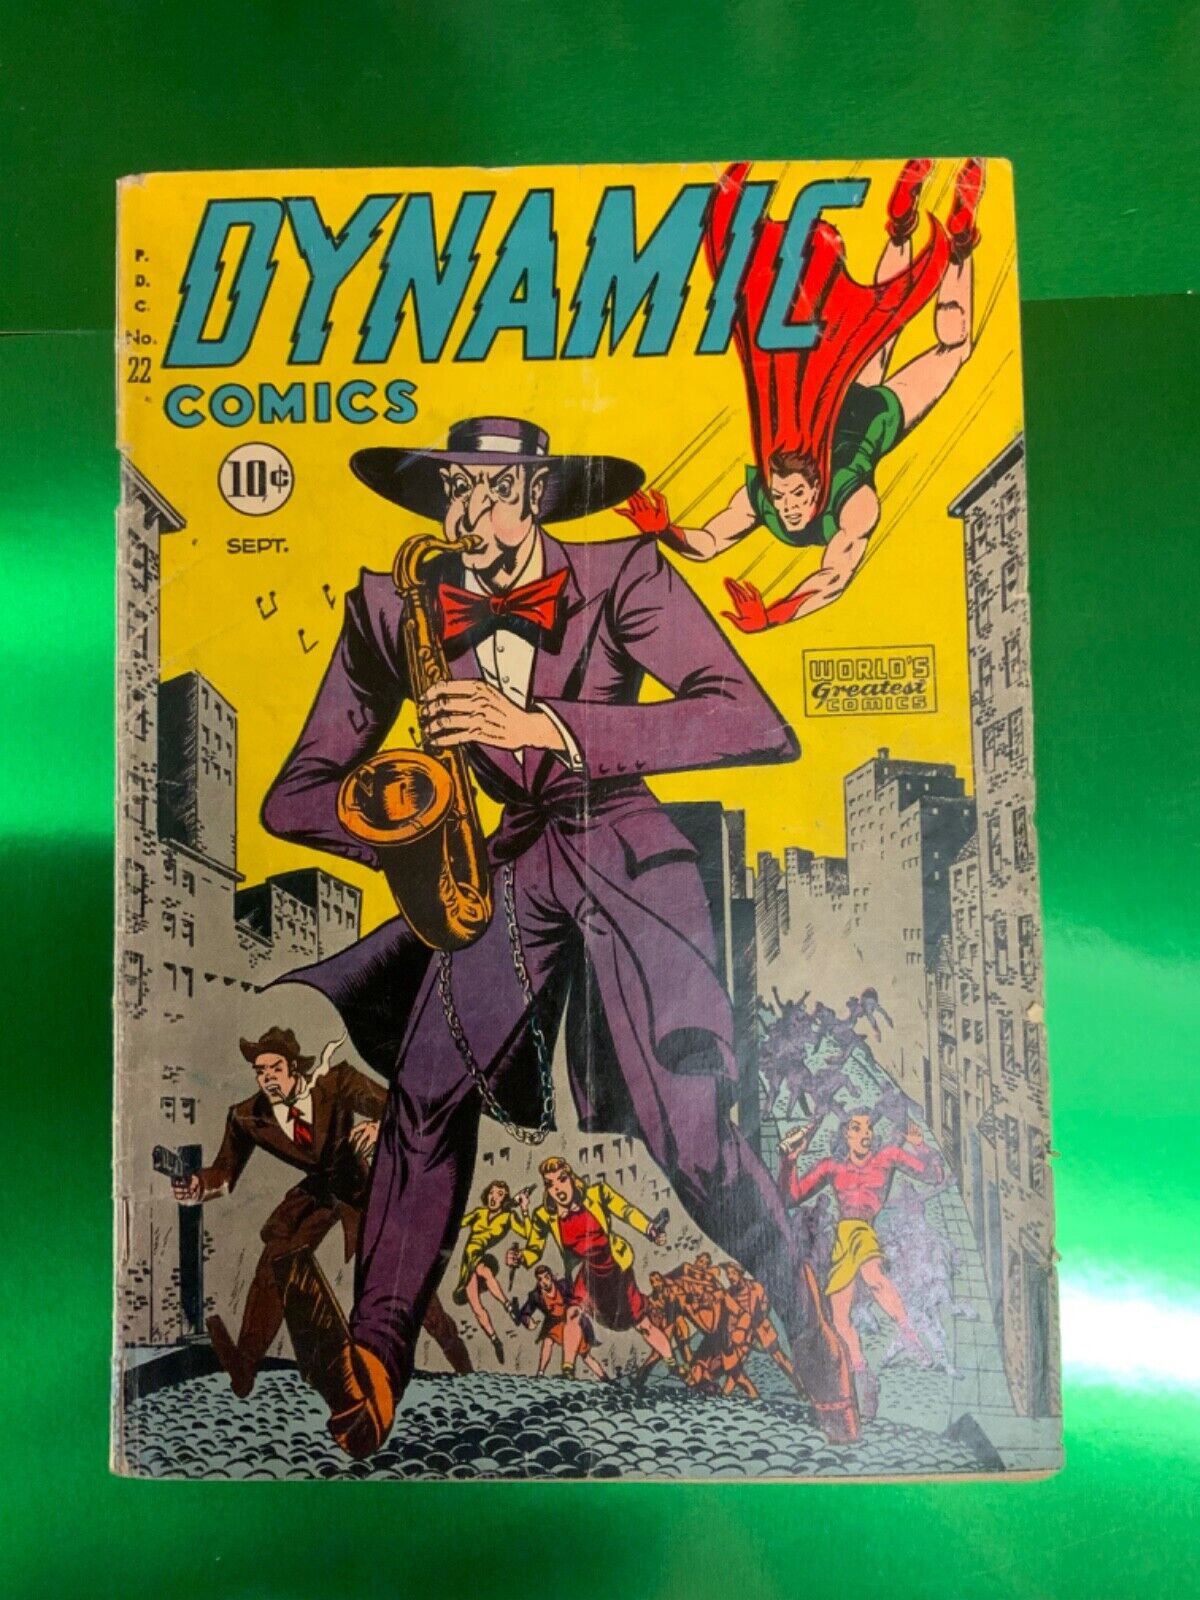 DYNAMIC COMICS #22 1947 CHESLER DYNAMIC MAN YANKEE BOY COMPLETE NICE COPY